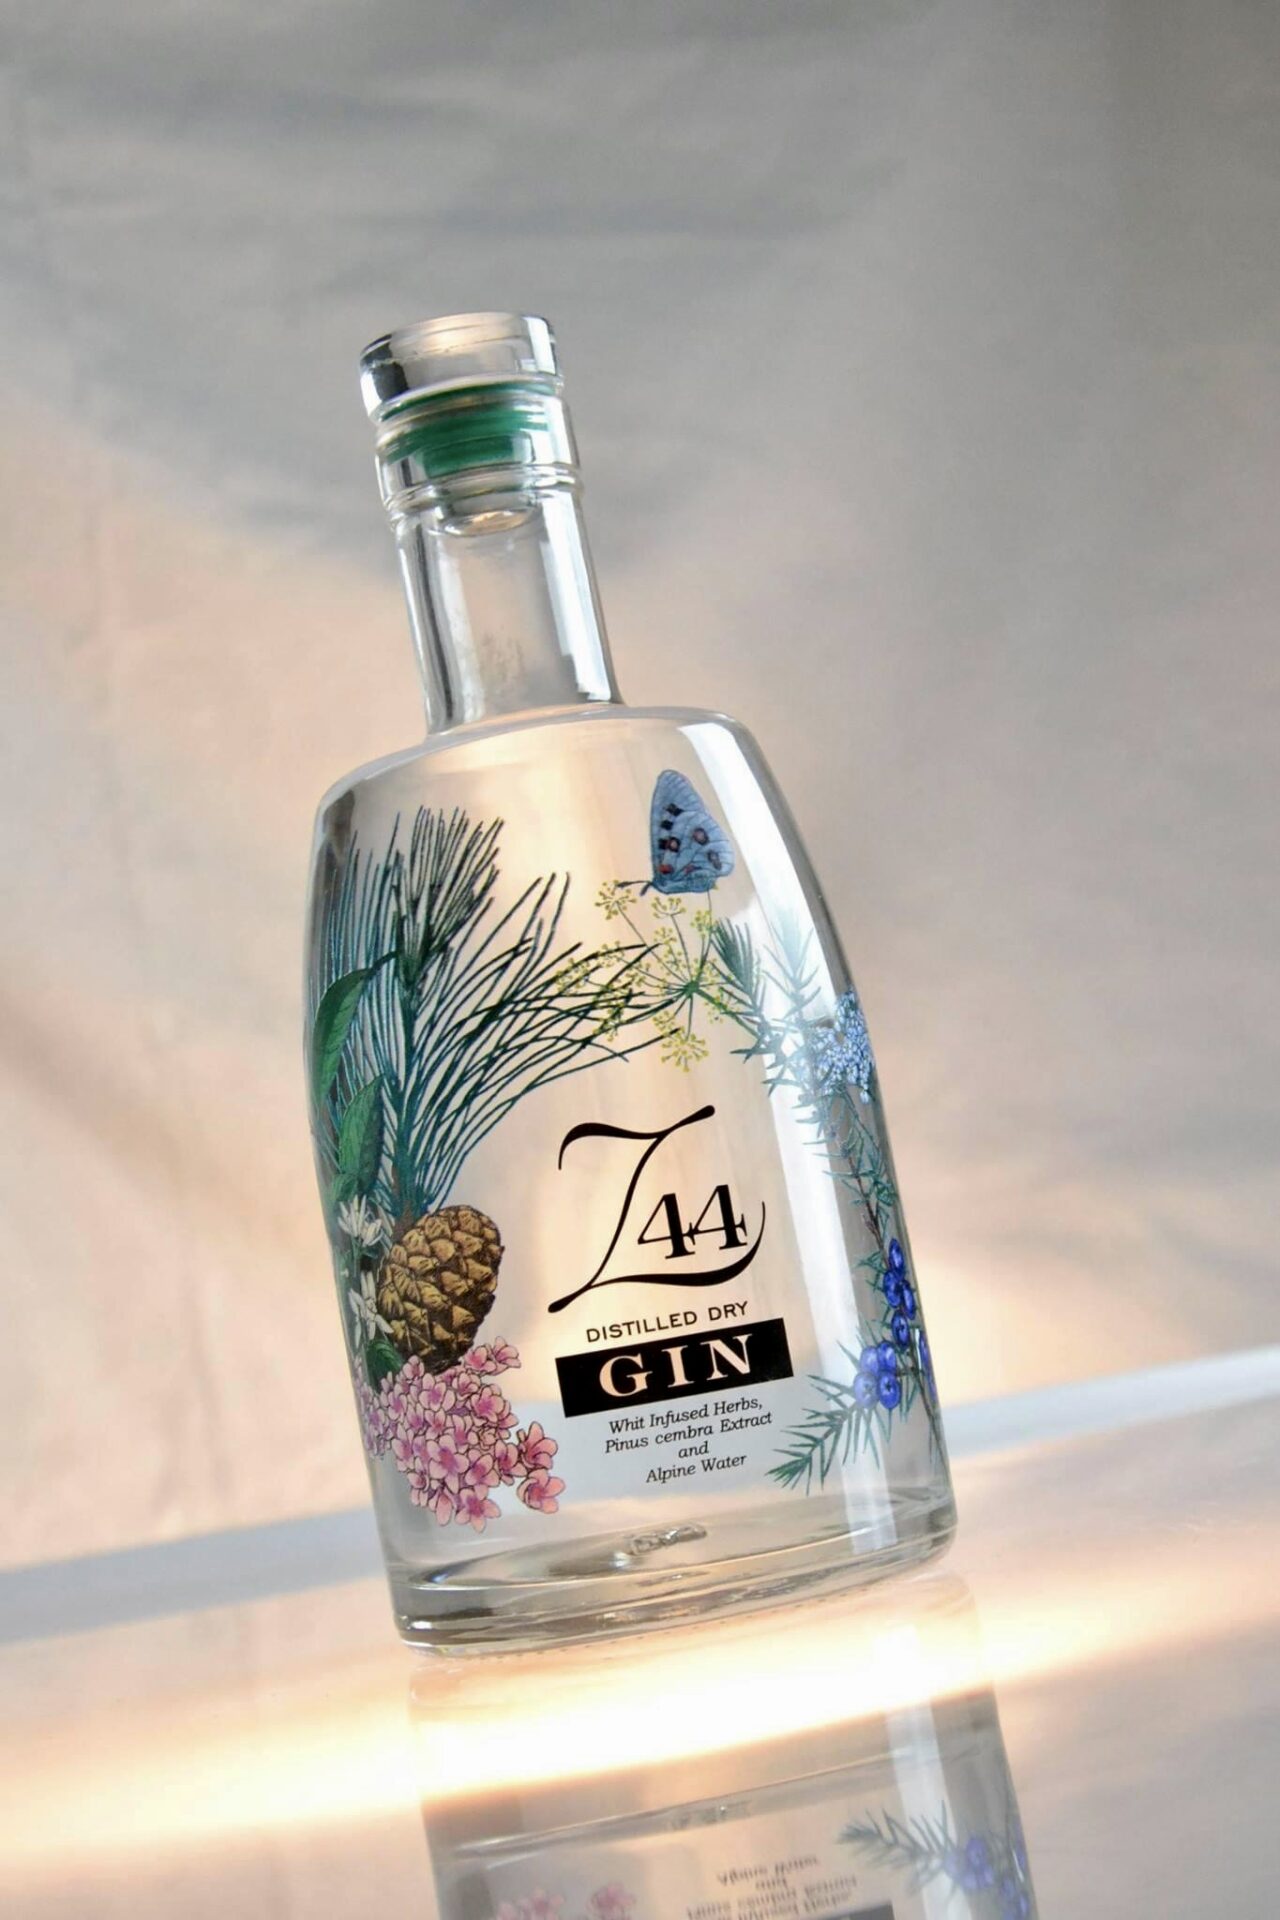 Z44 gin